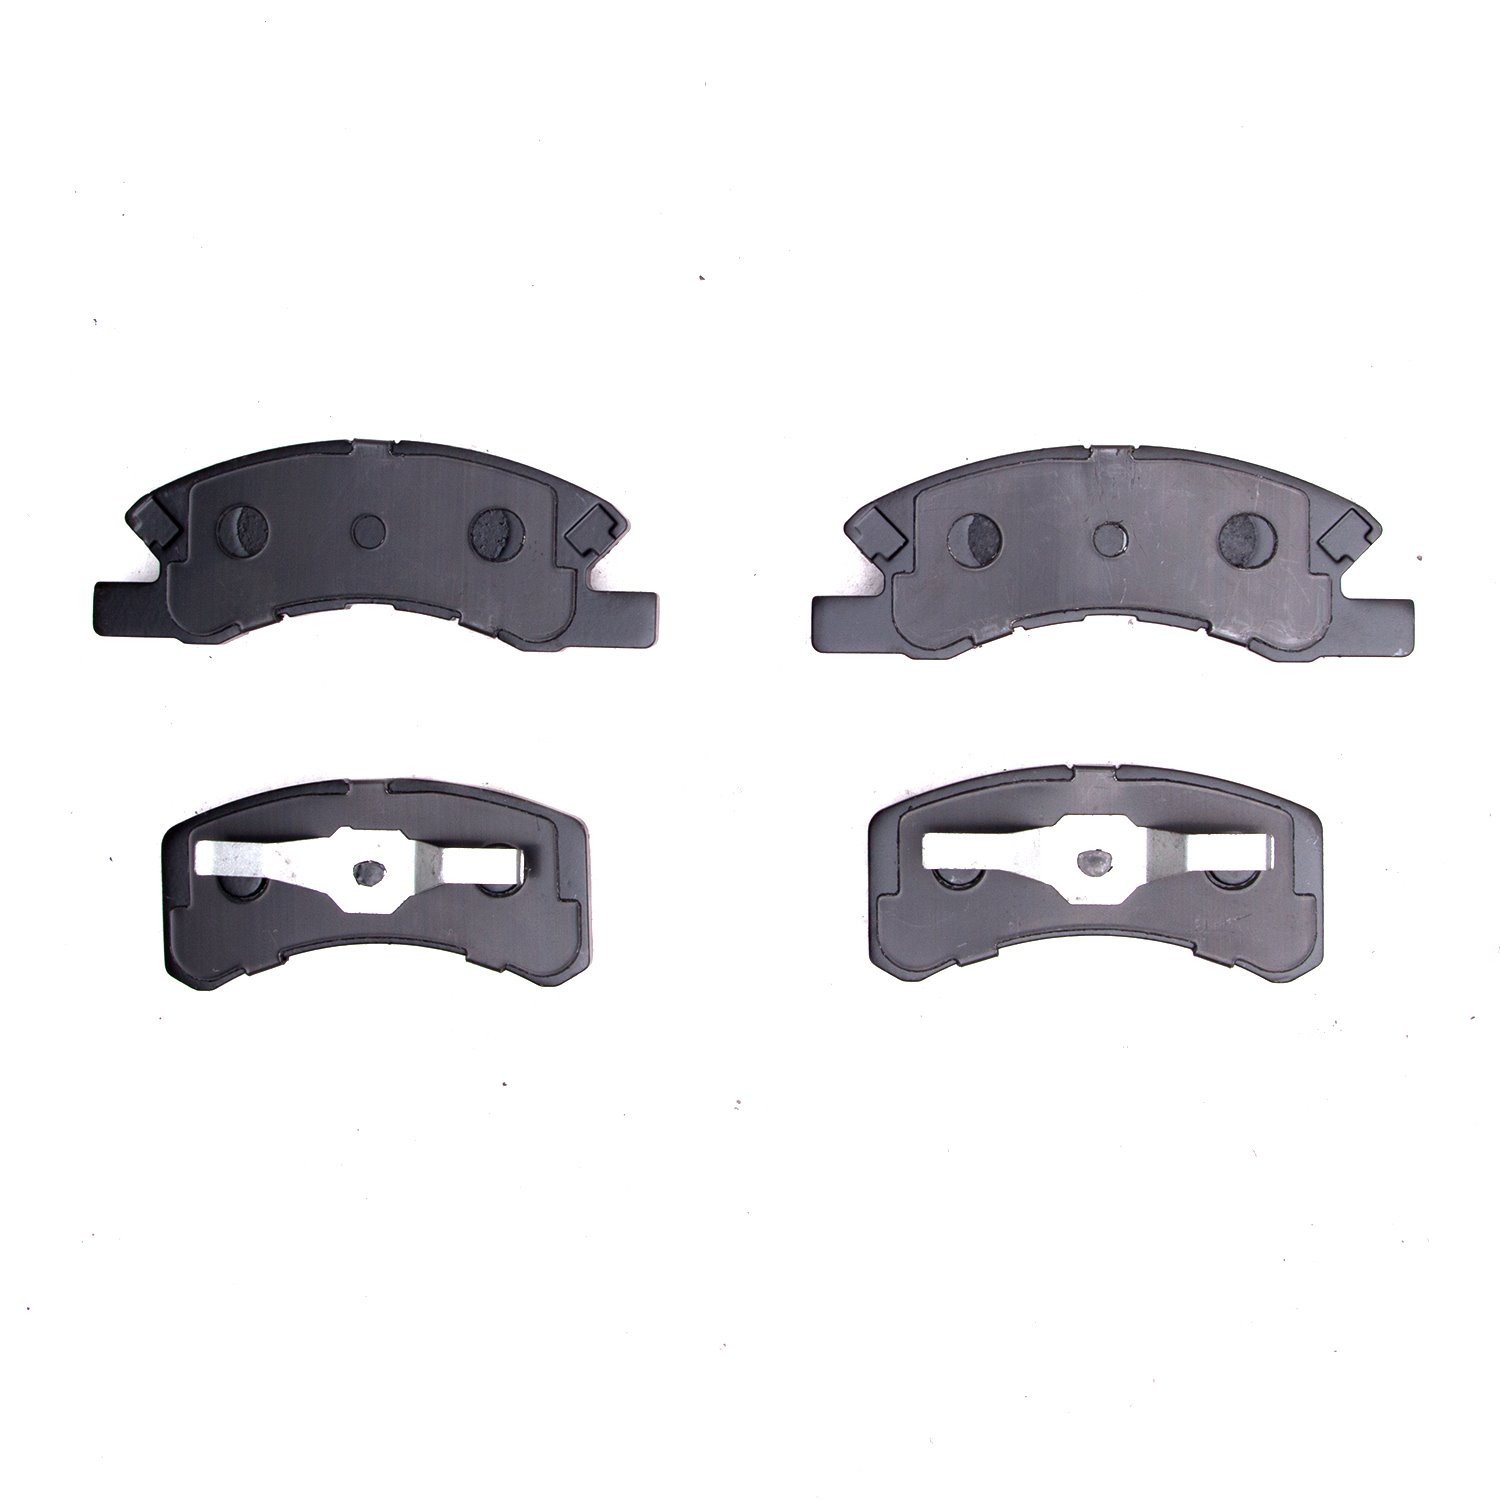 1551-1731-00 5000 Advanced Ceramic Brake Pads, Fits Select Multiple Makes/Models, Position: Front